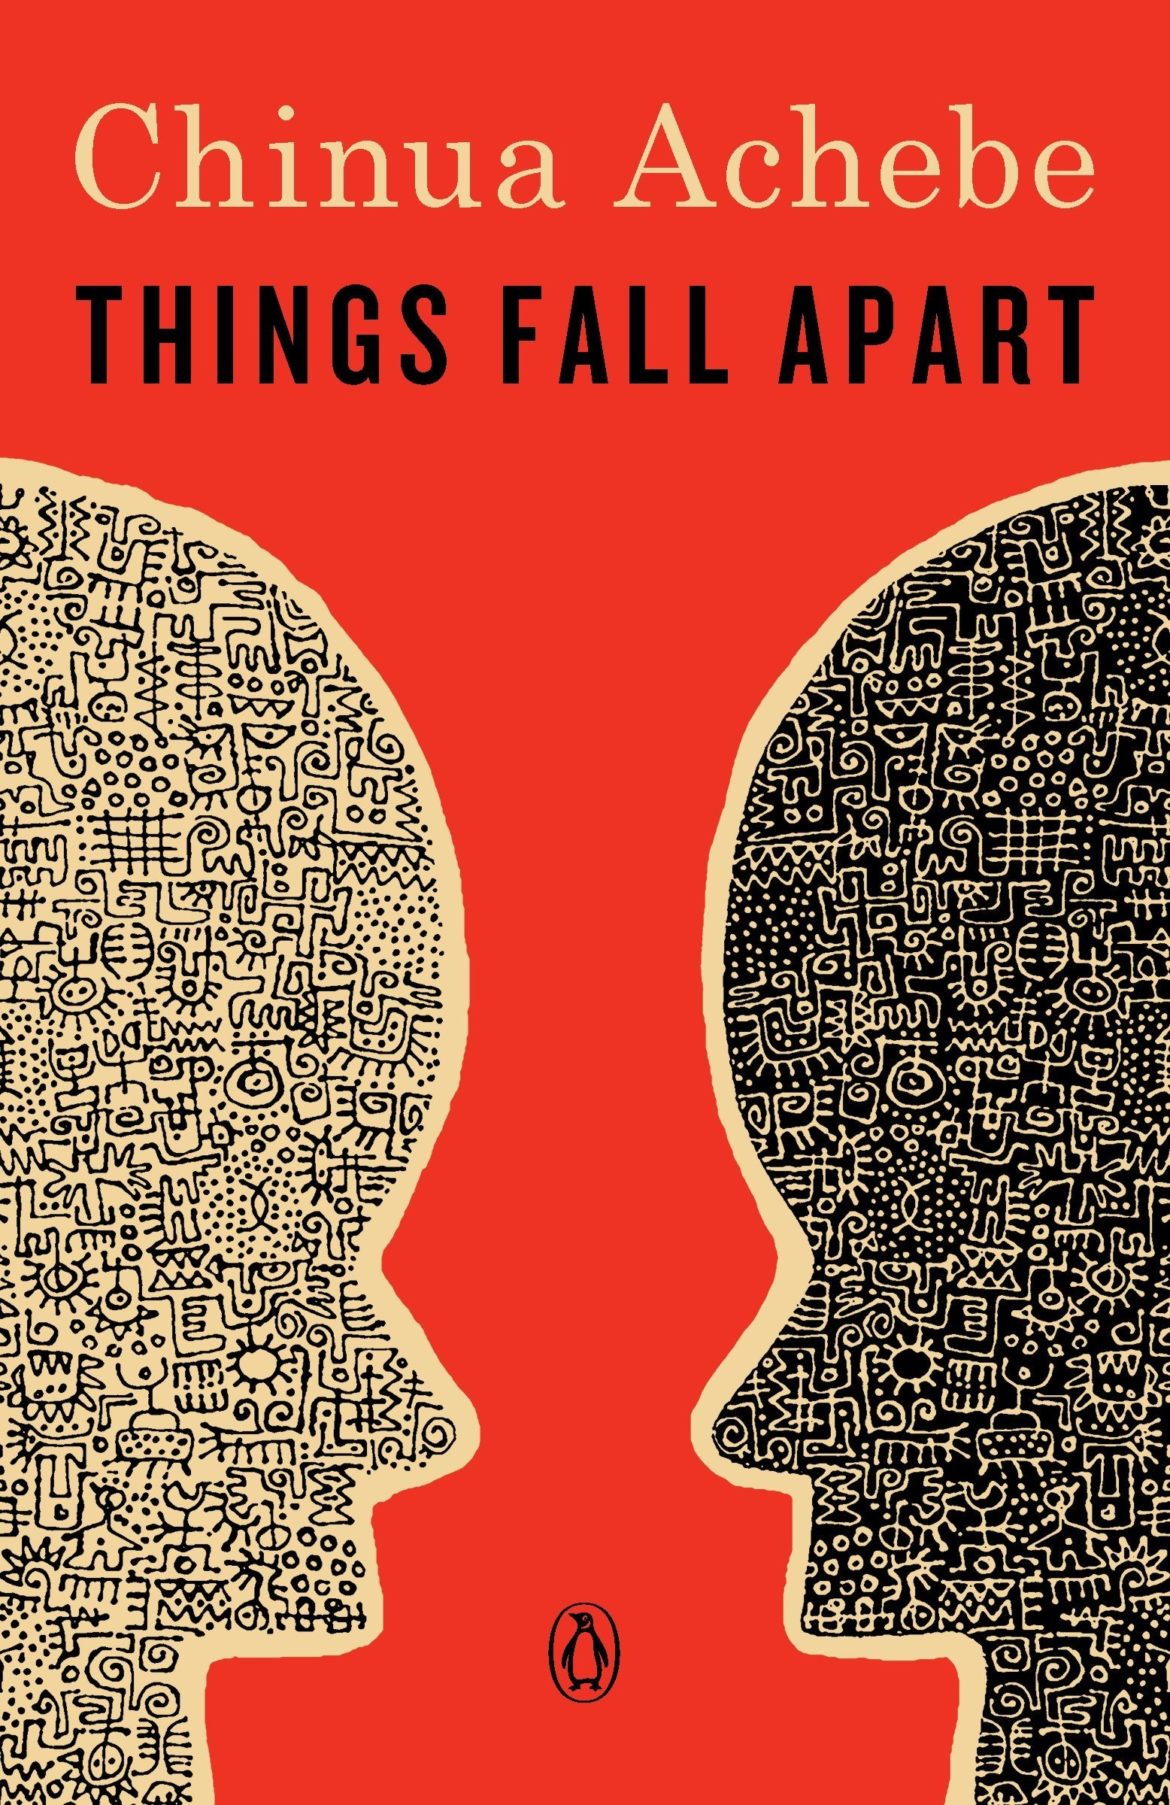 Things fall apart, Chinua Achebe,